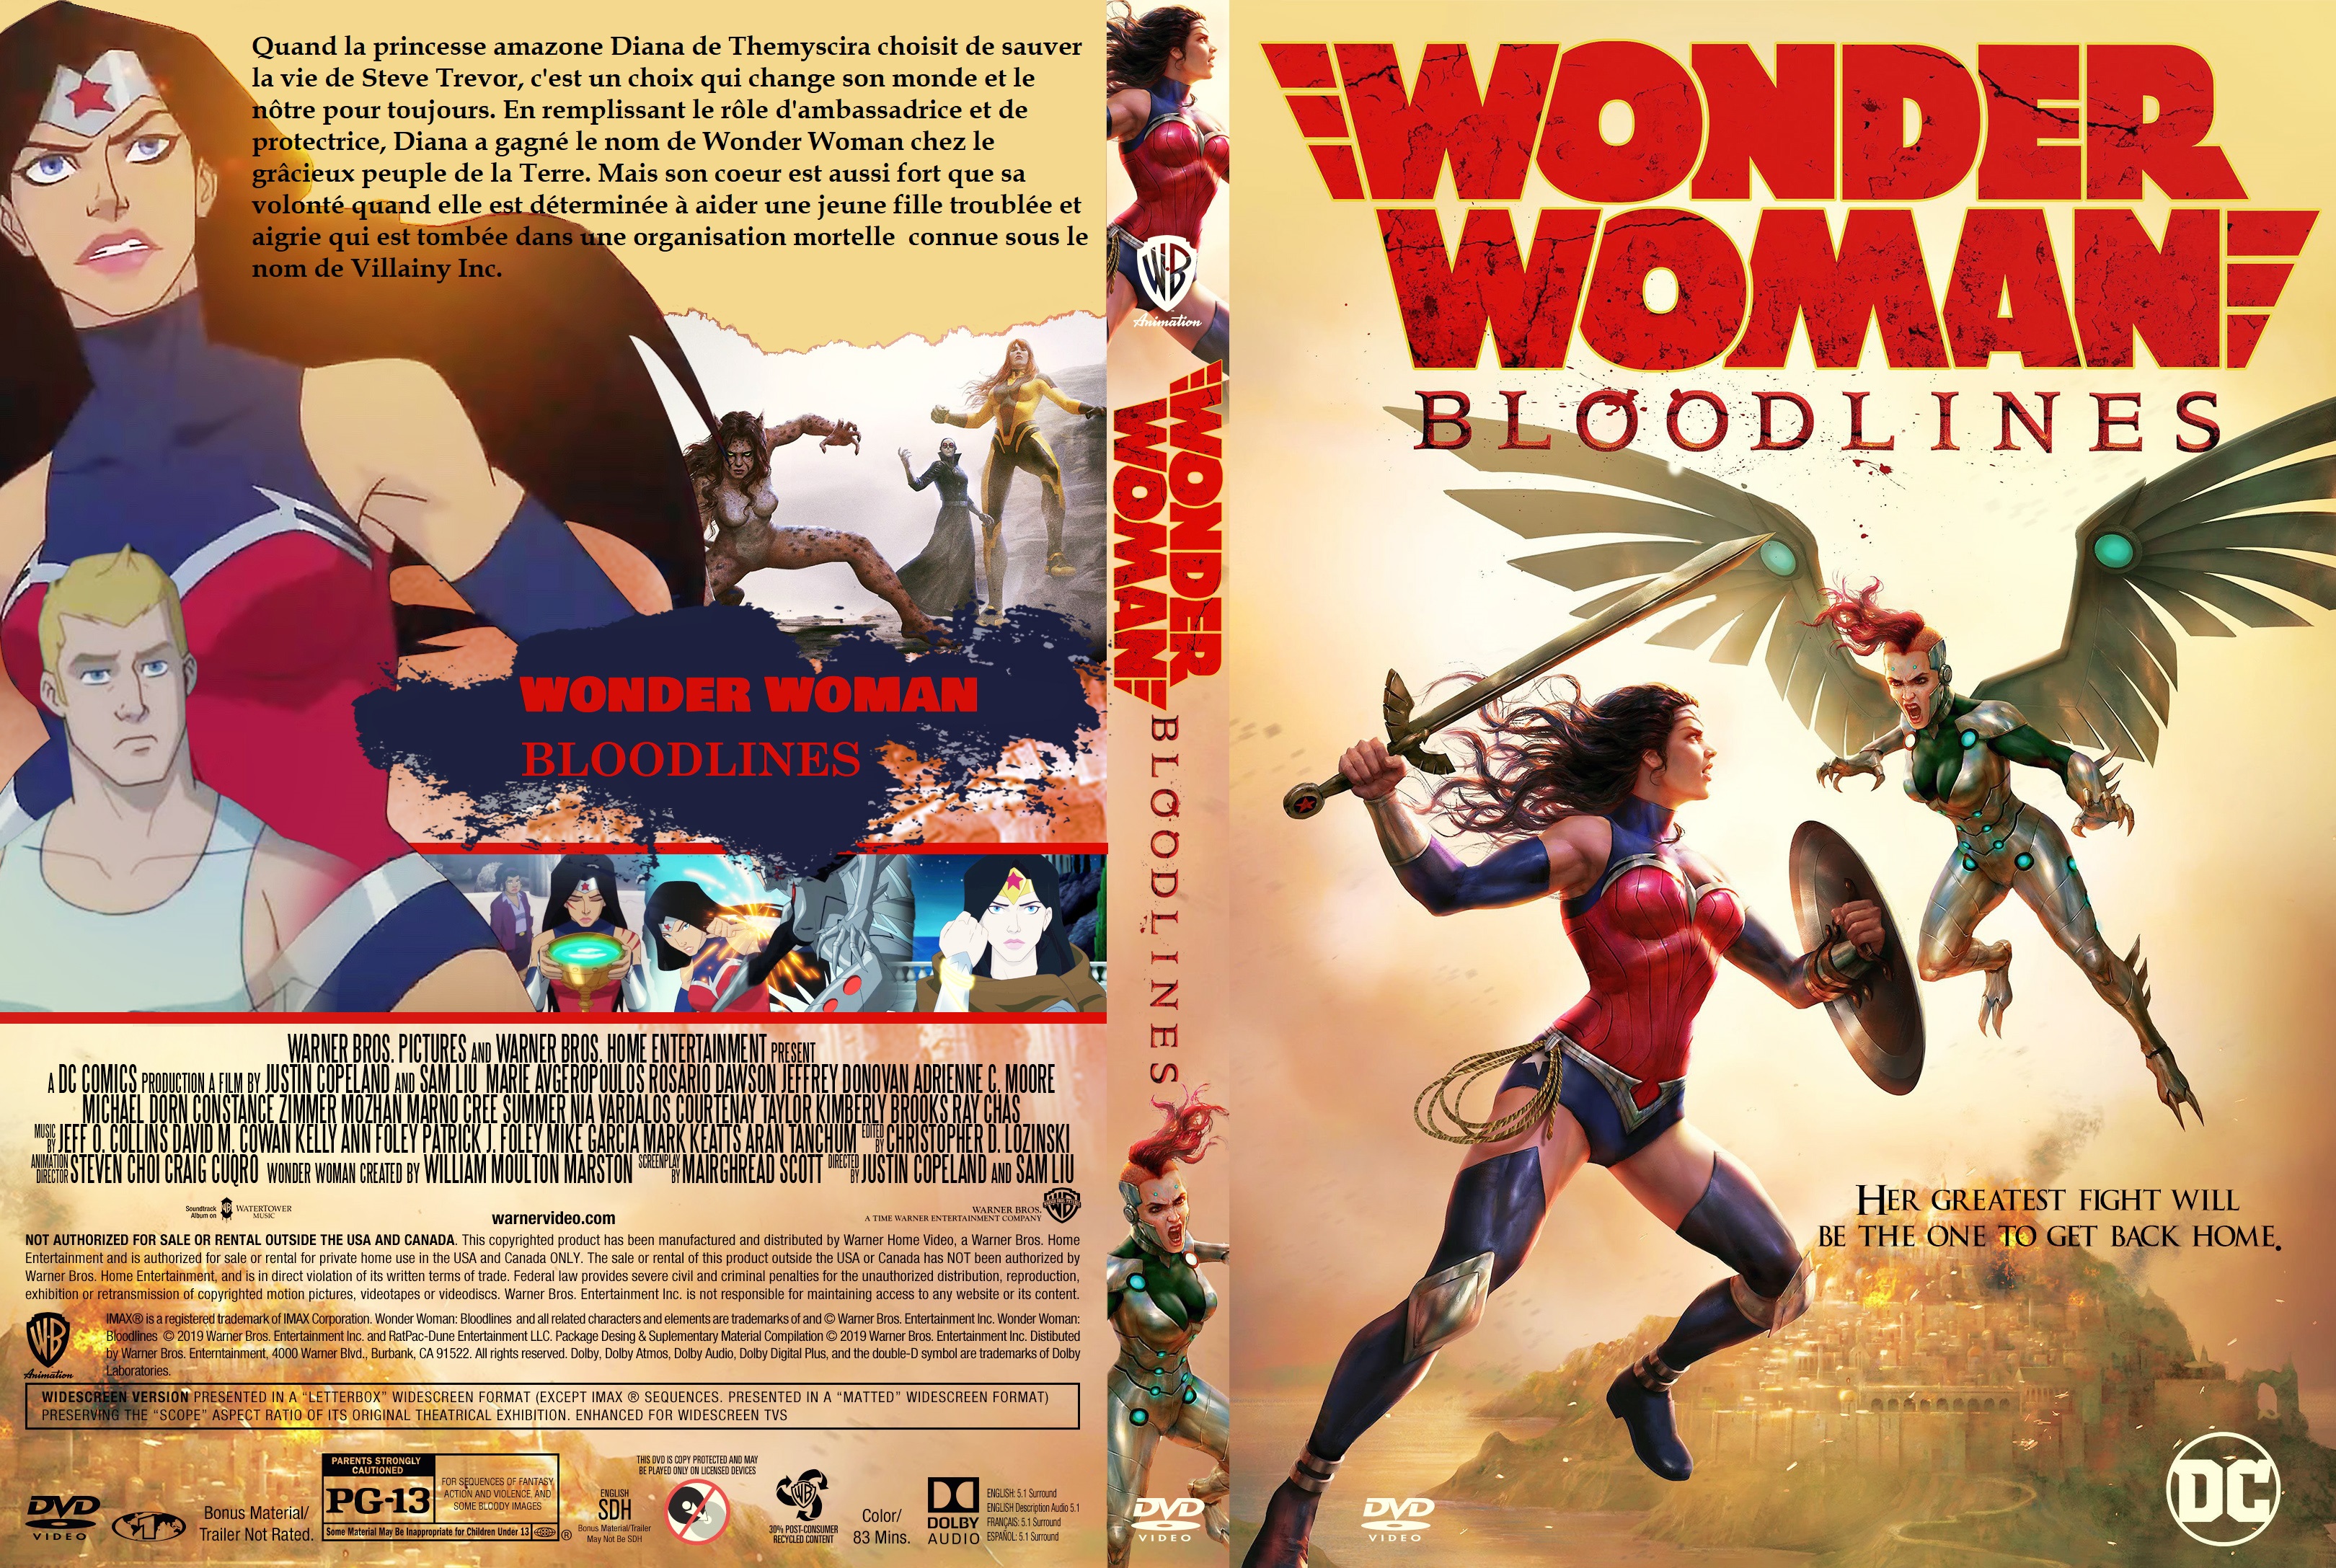 Jaquette DVD Wonder Woman Bloodlines custom